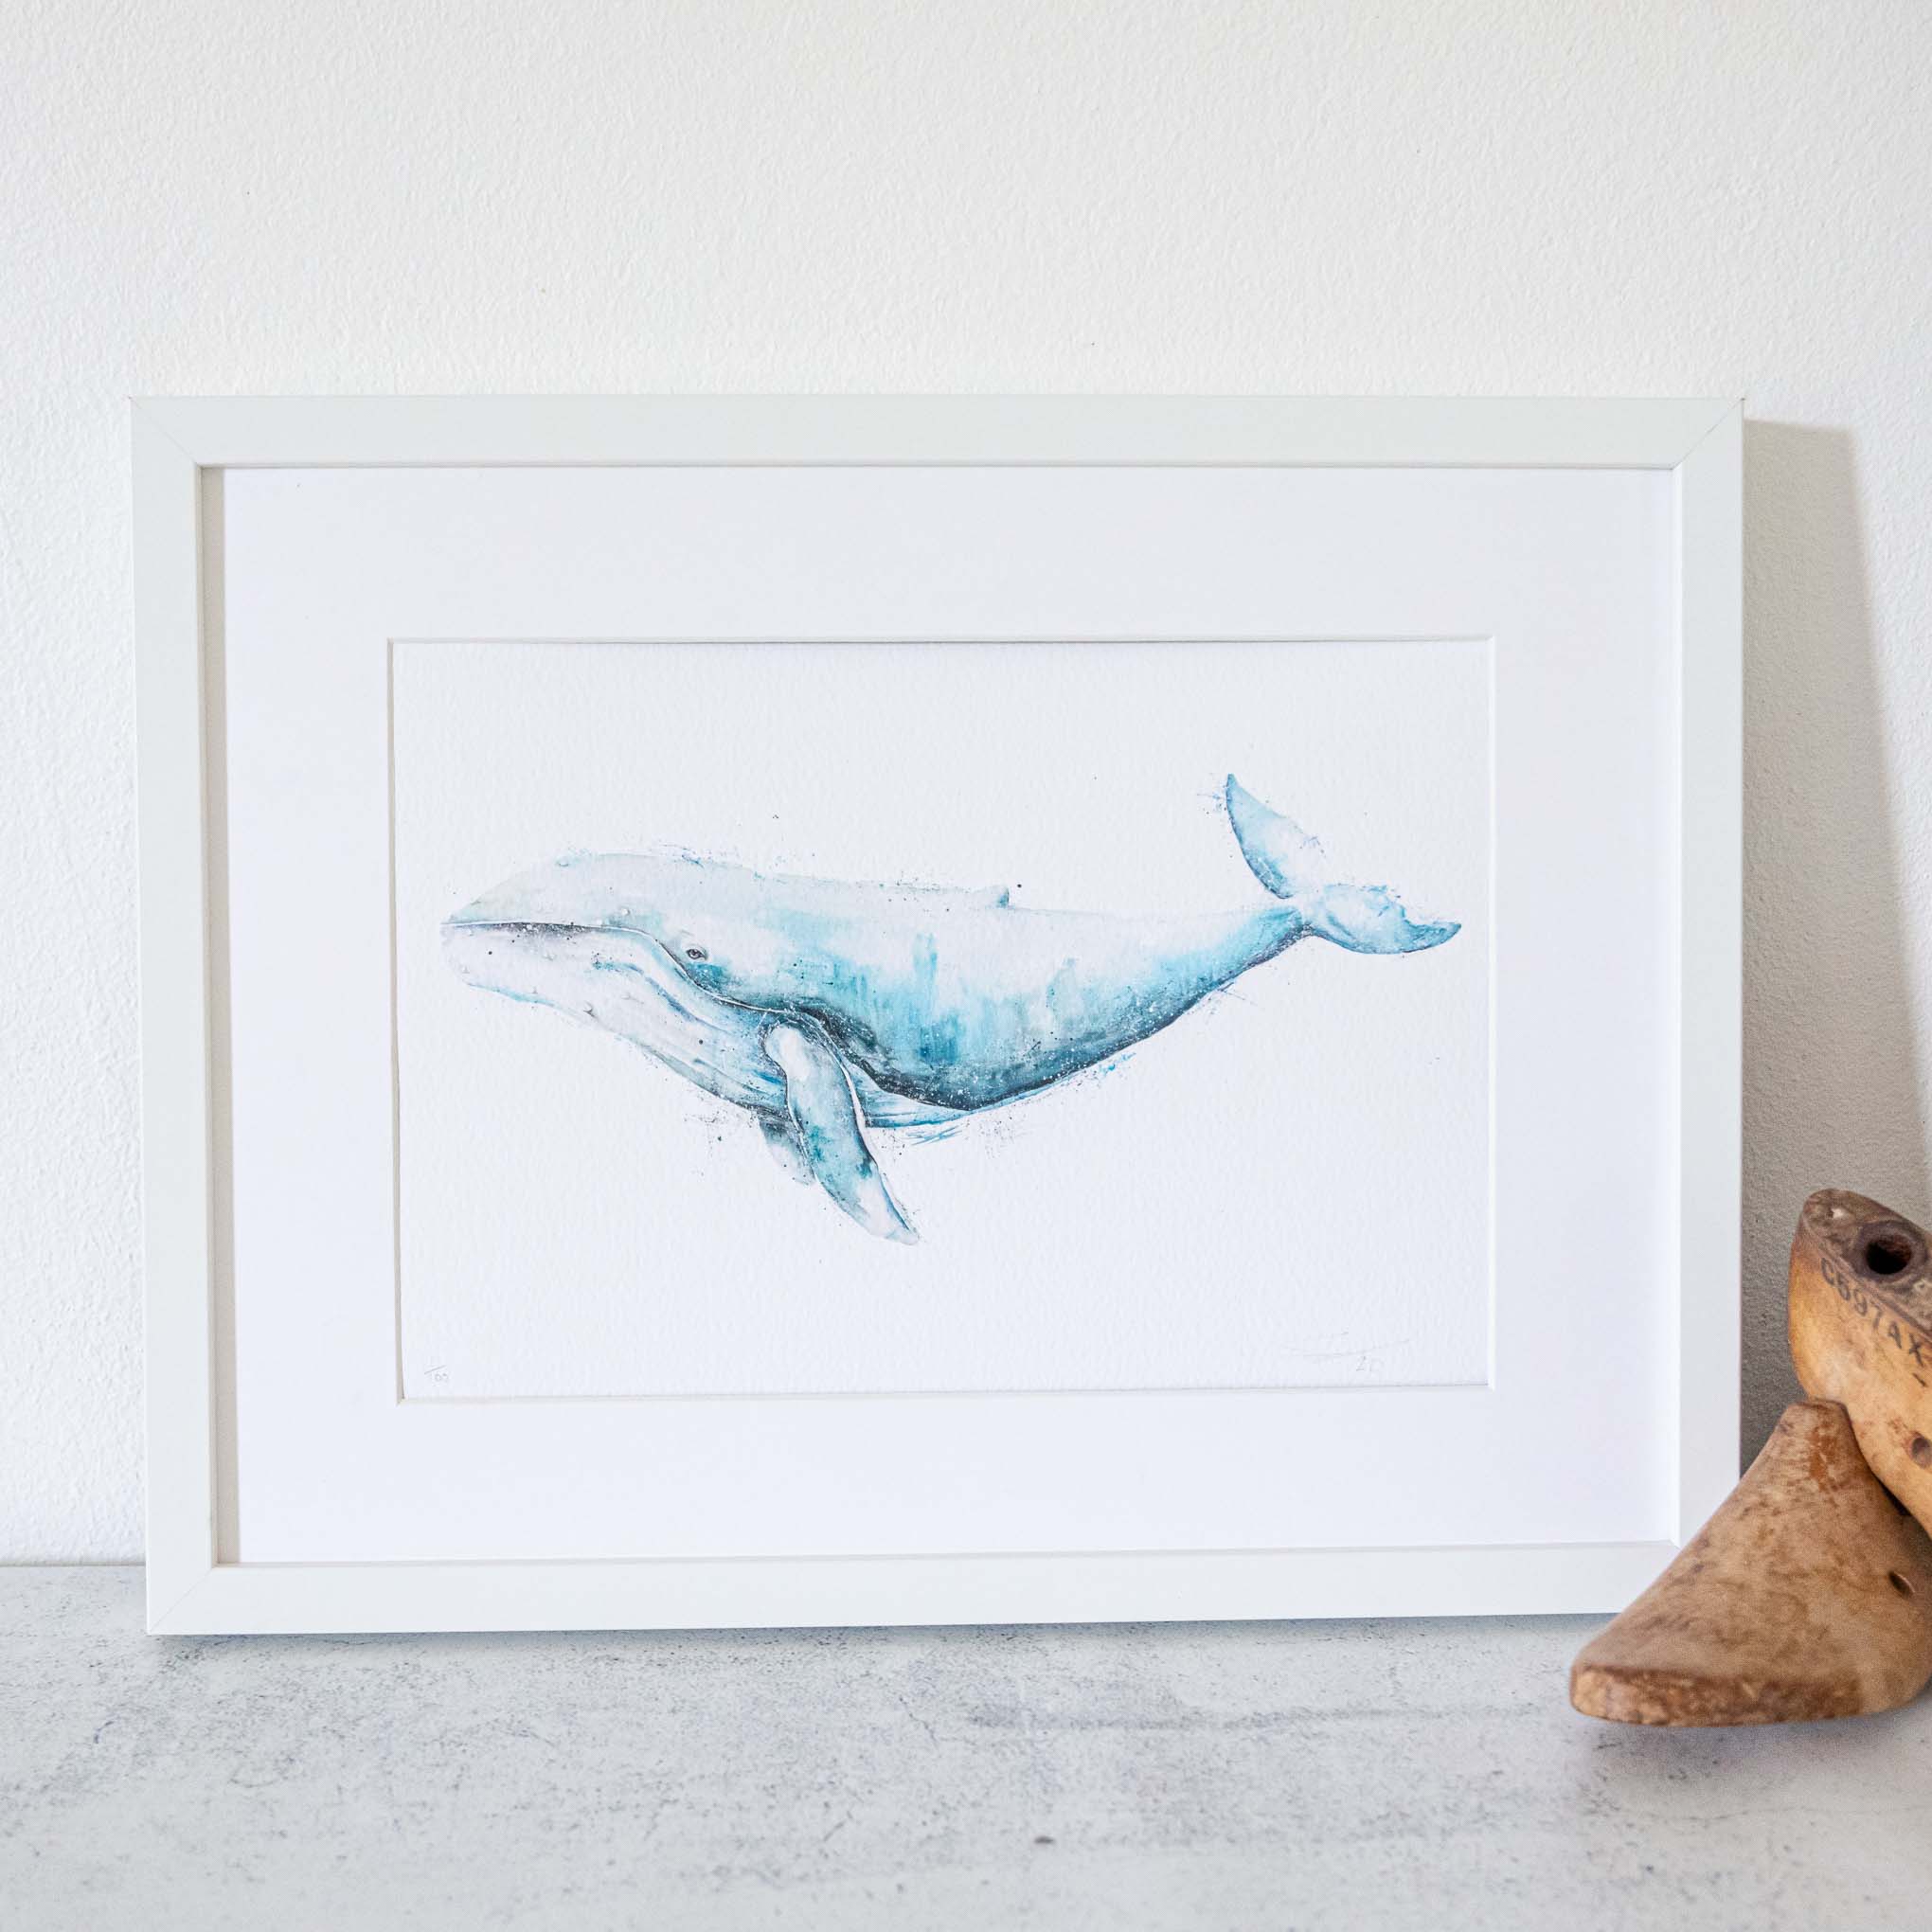 Framed white artwork of a humpback whale